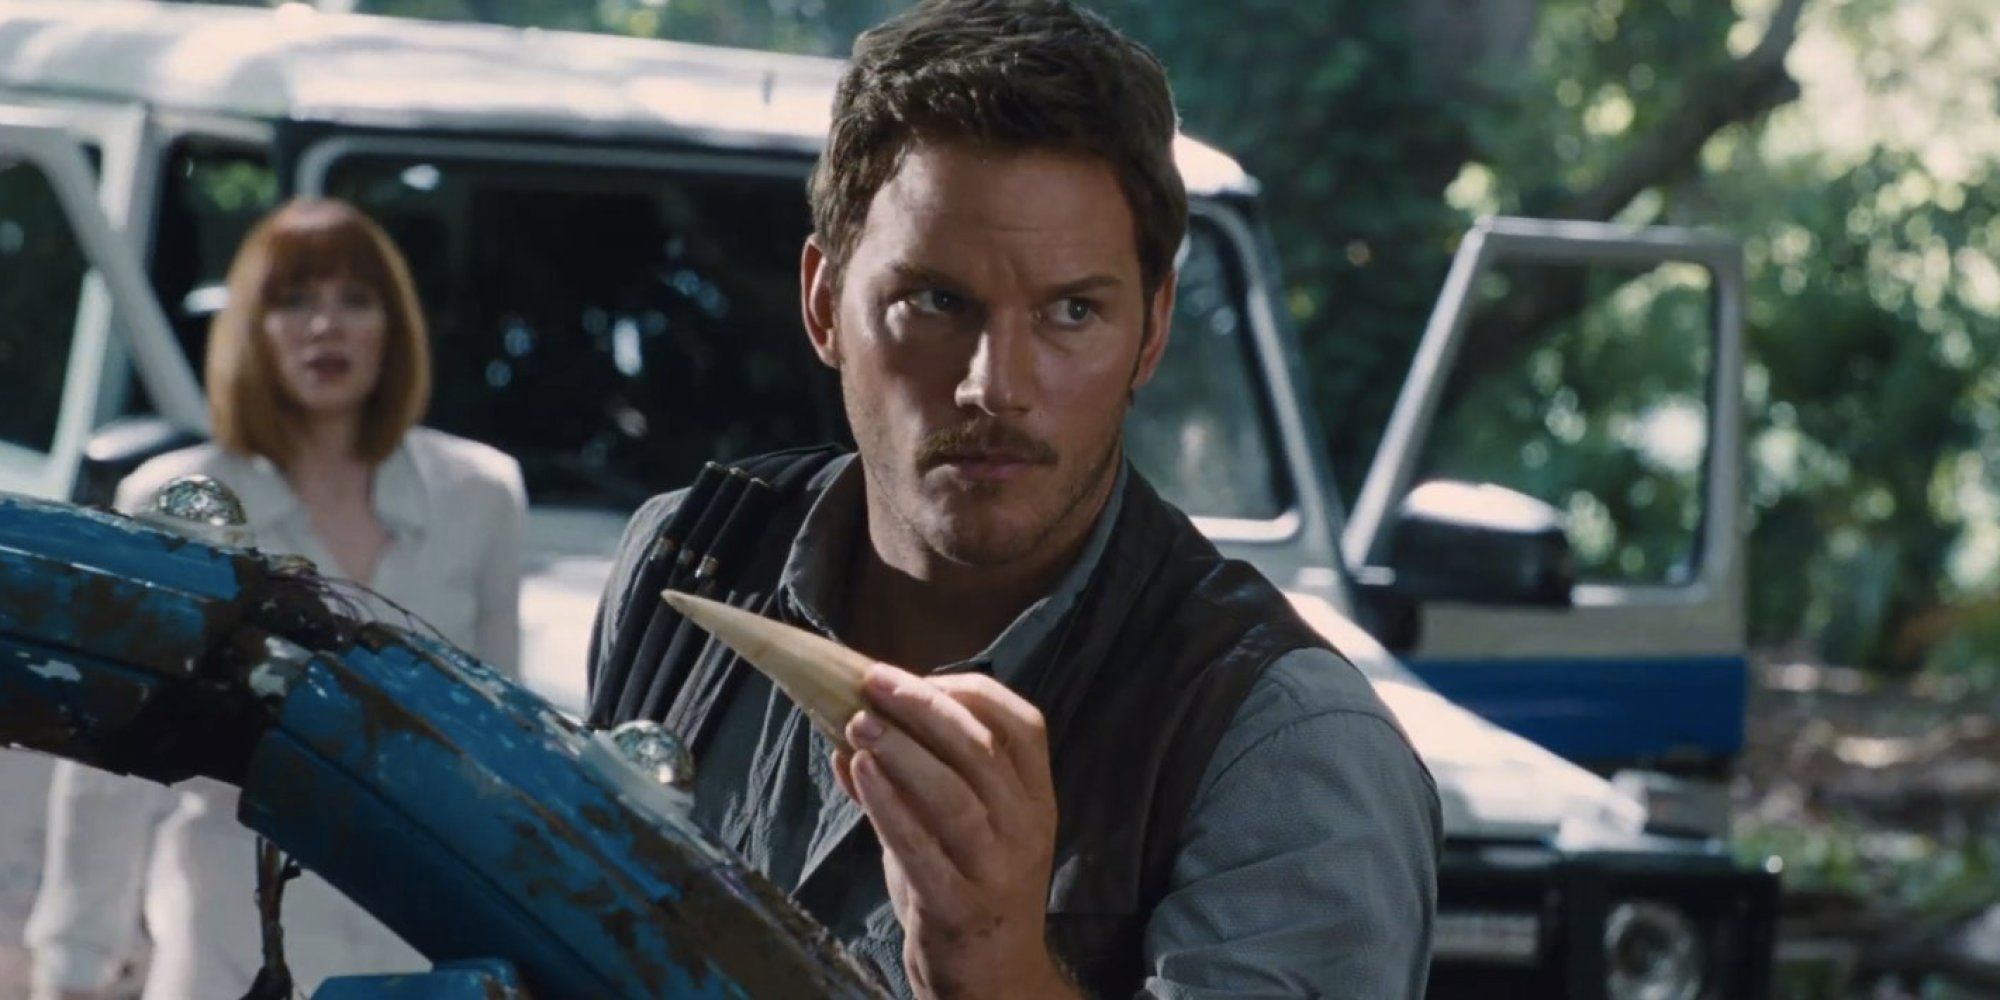 Jurassic World Chris Pratt as Owen Grady